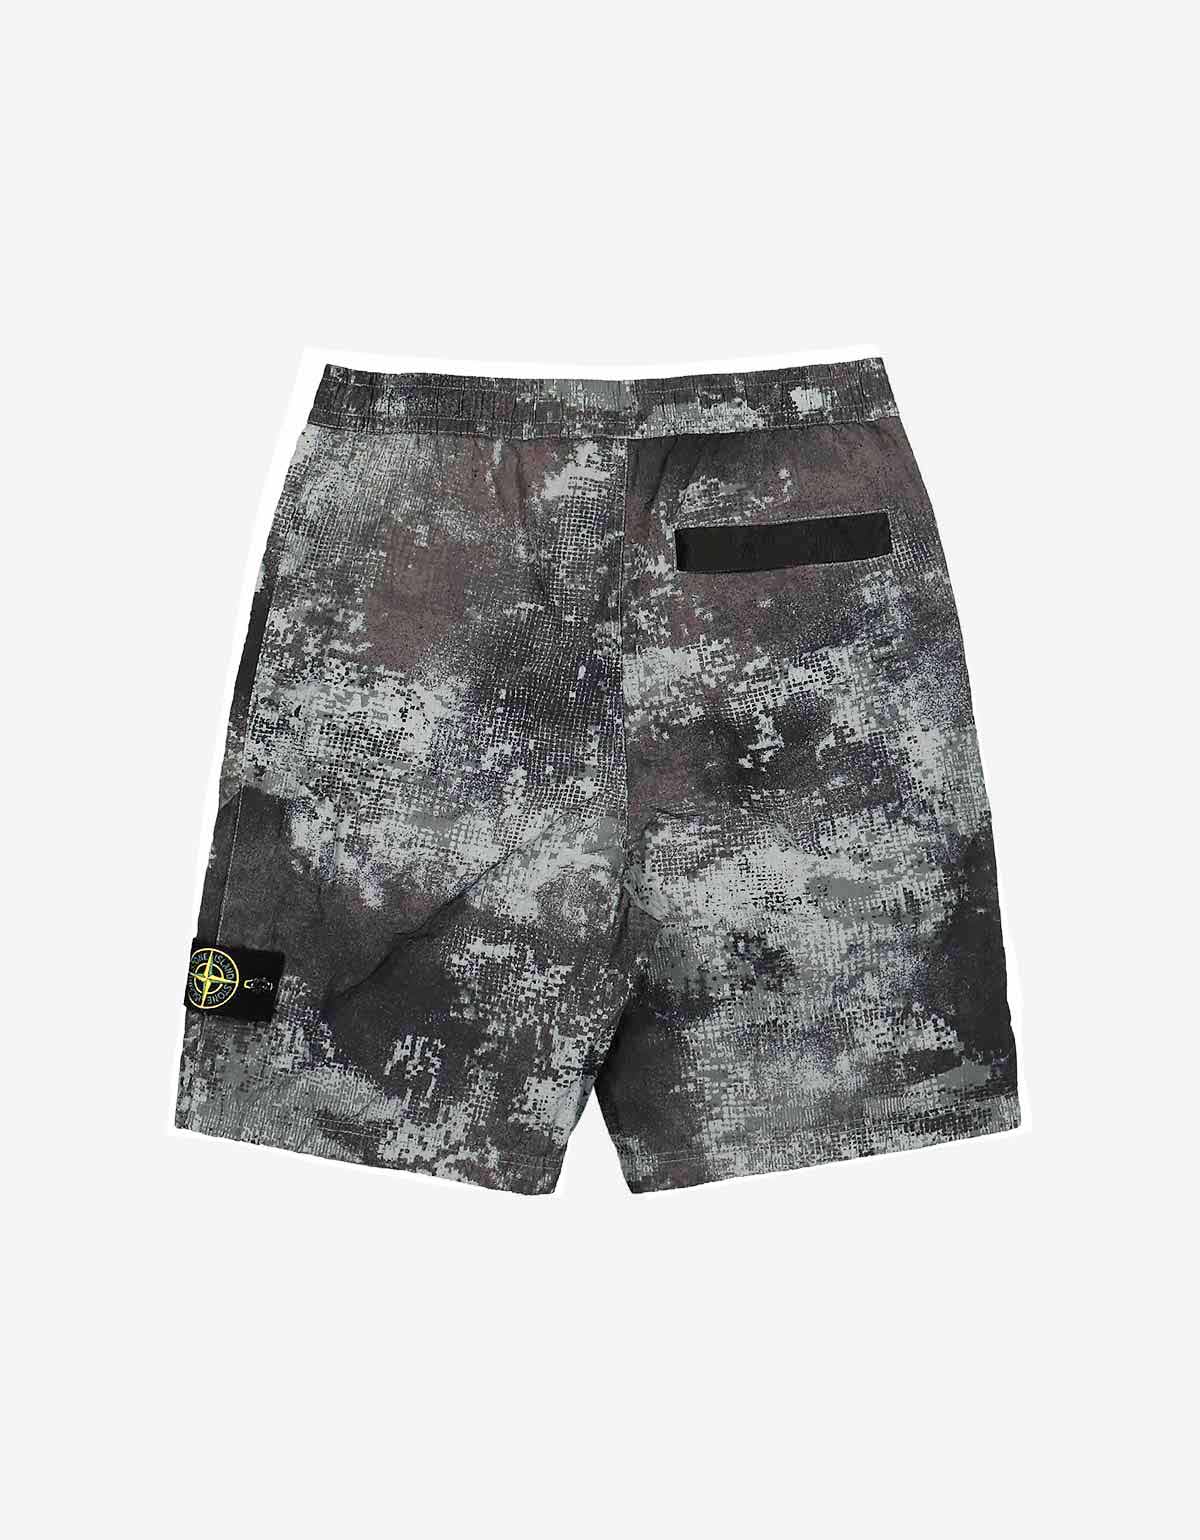 Stone Island Stone Island Grey Camo Mesh Bermuda Comfort Shorts